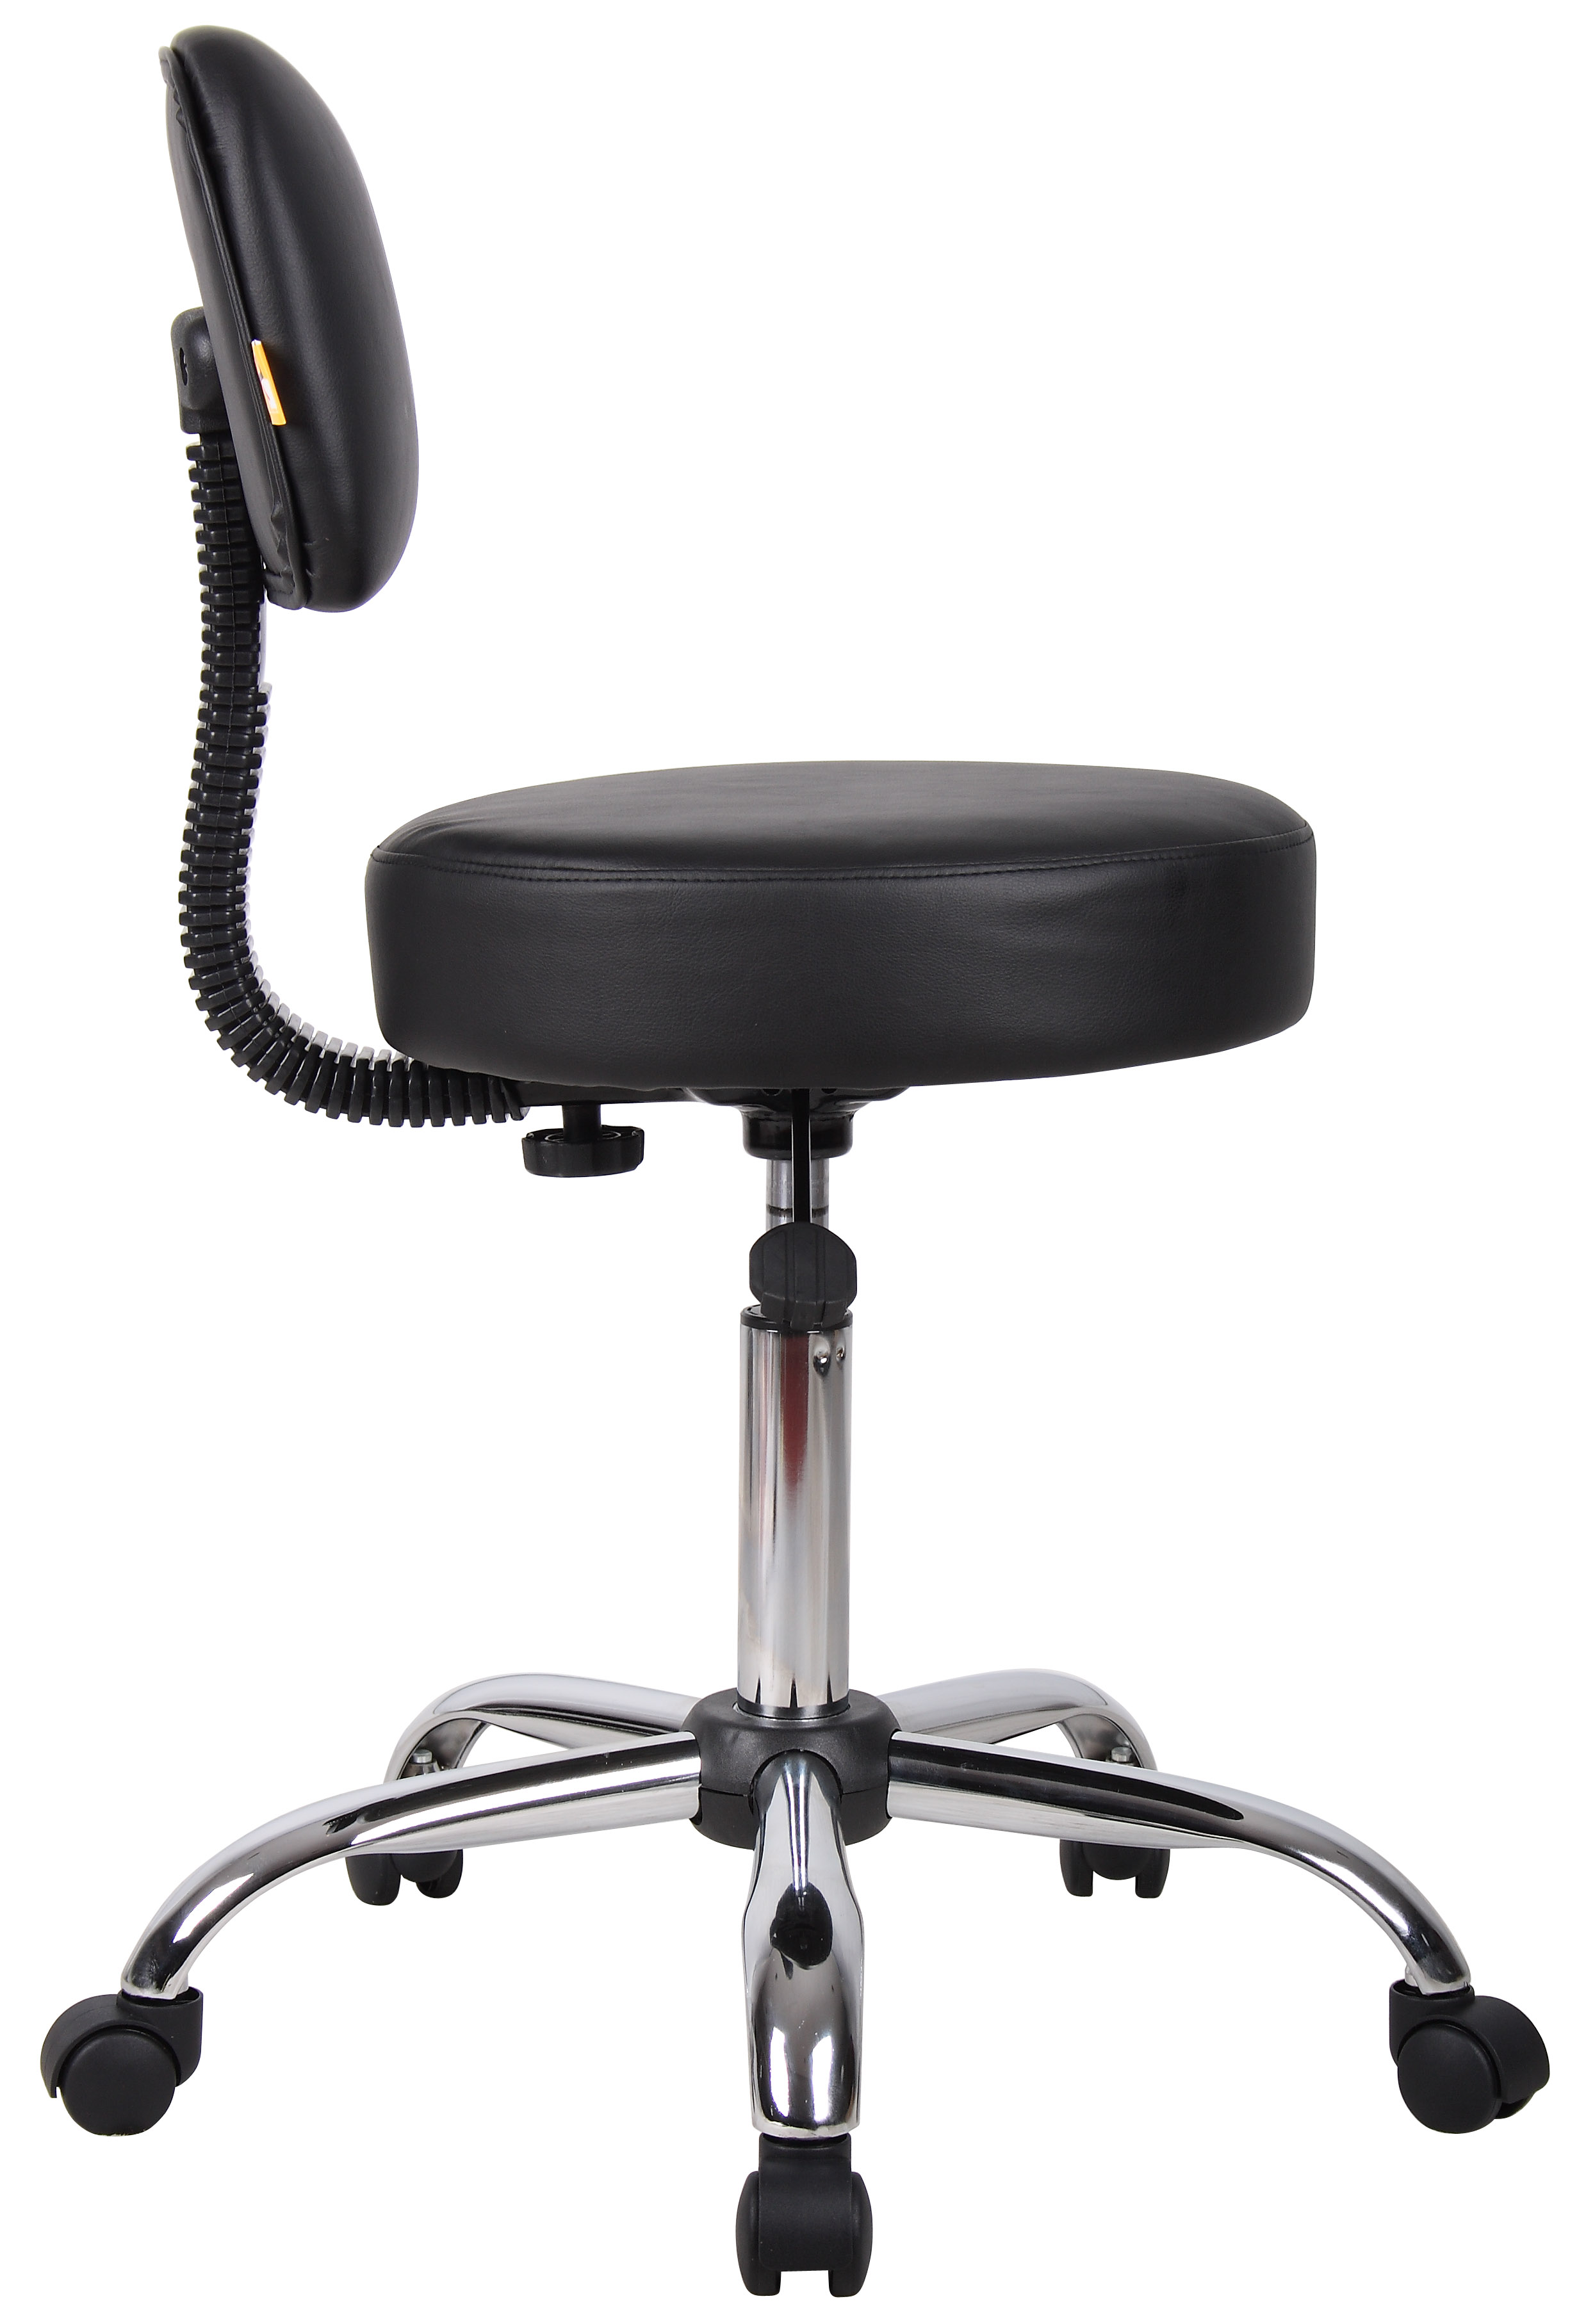 Boss Office & Home B245-BK Adjustable Medical Spa Rolling Desk Stool with Back, Black - image 4 of 7